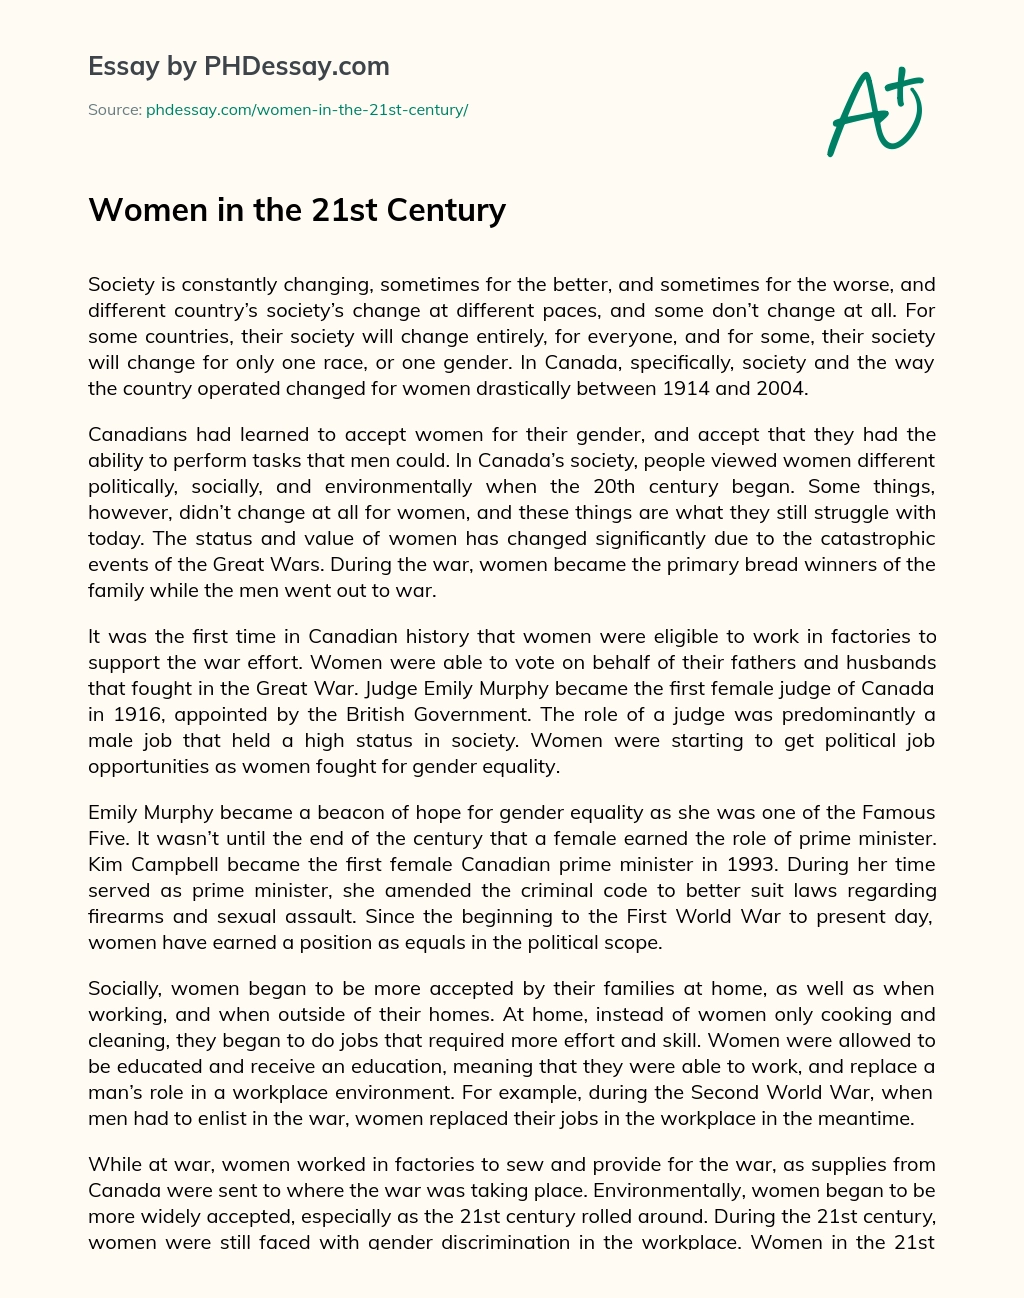 Women in the 21st Century essay